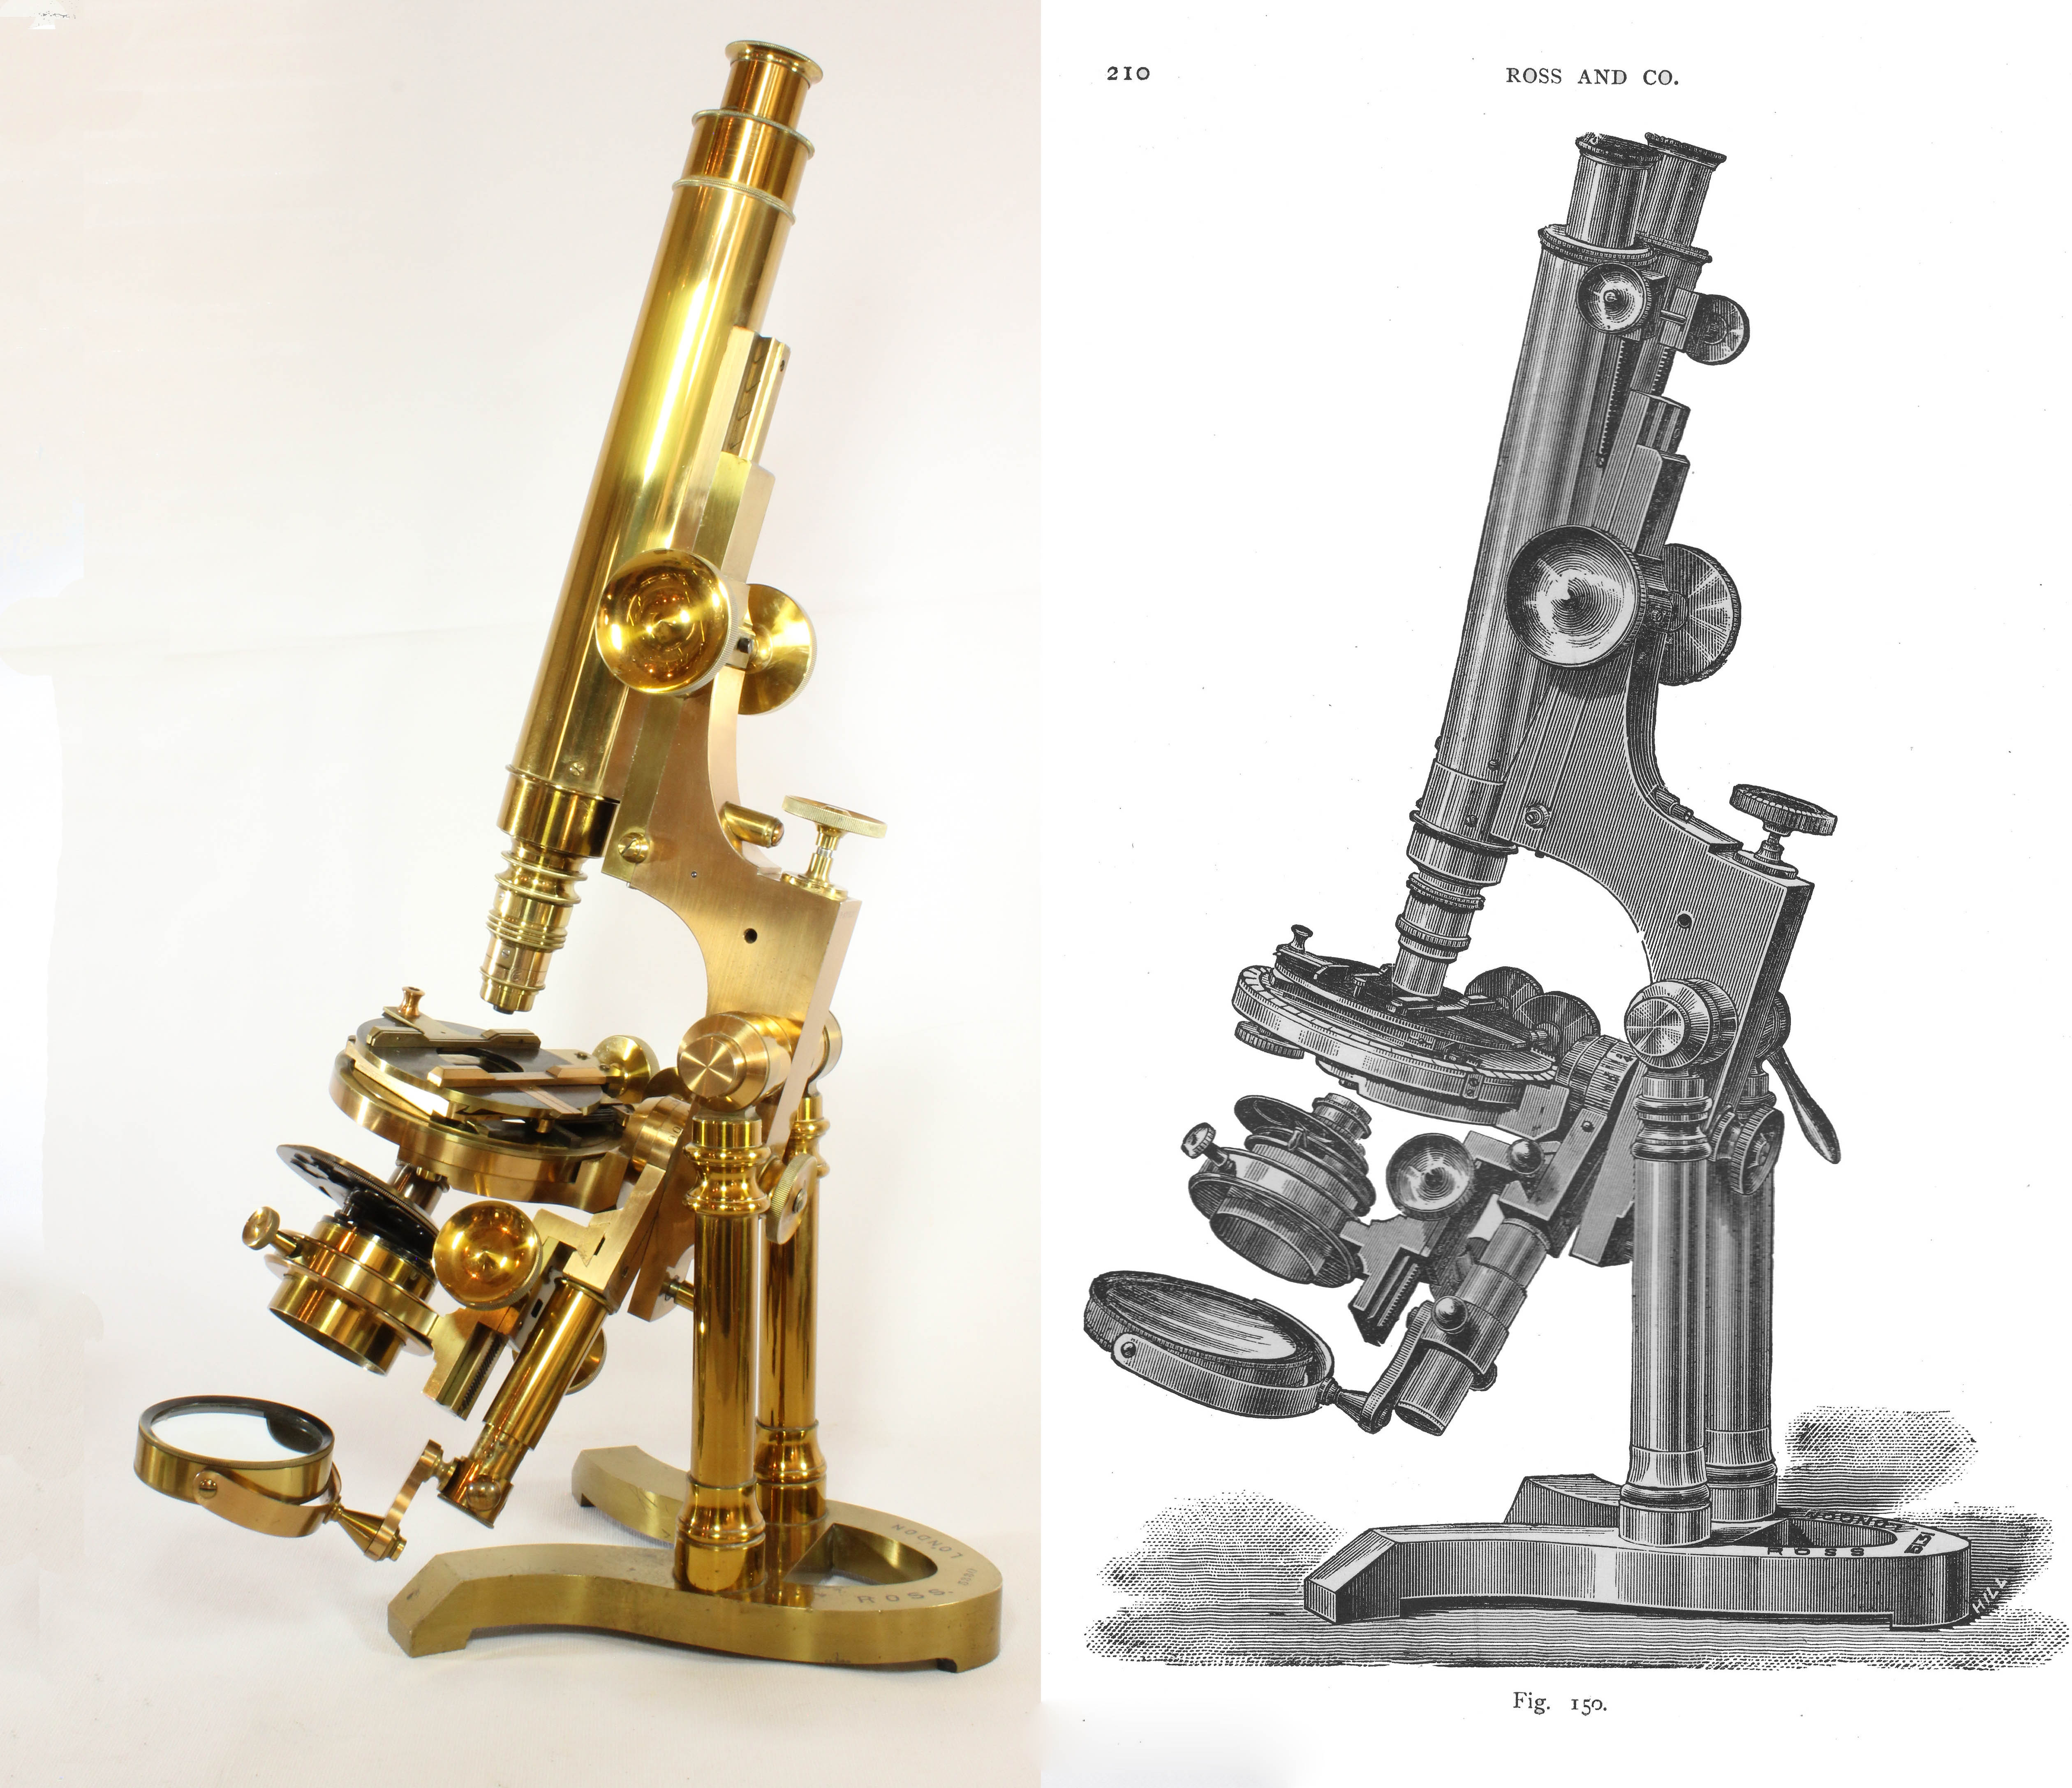 The Ross Zentmayer microscope substage